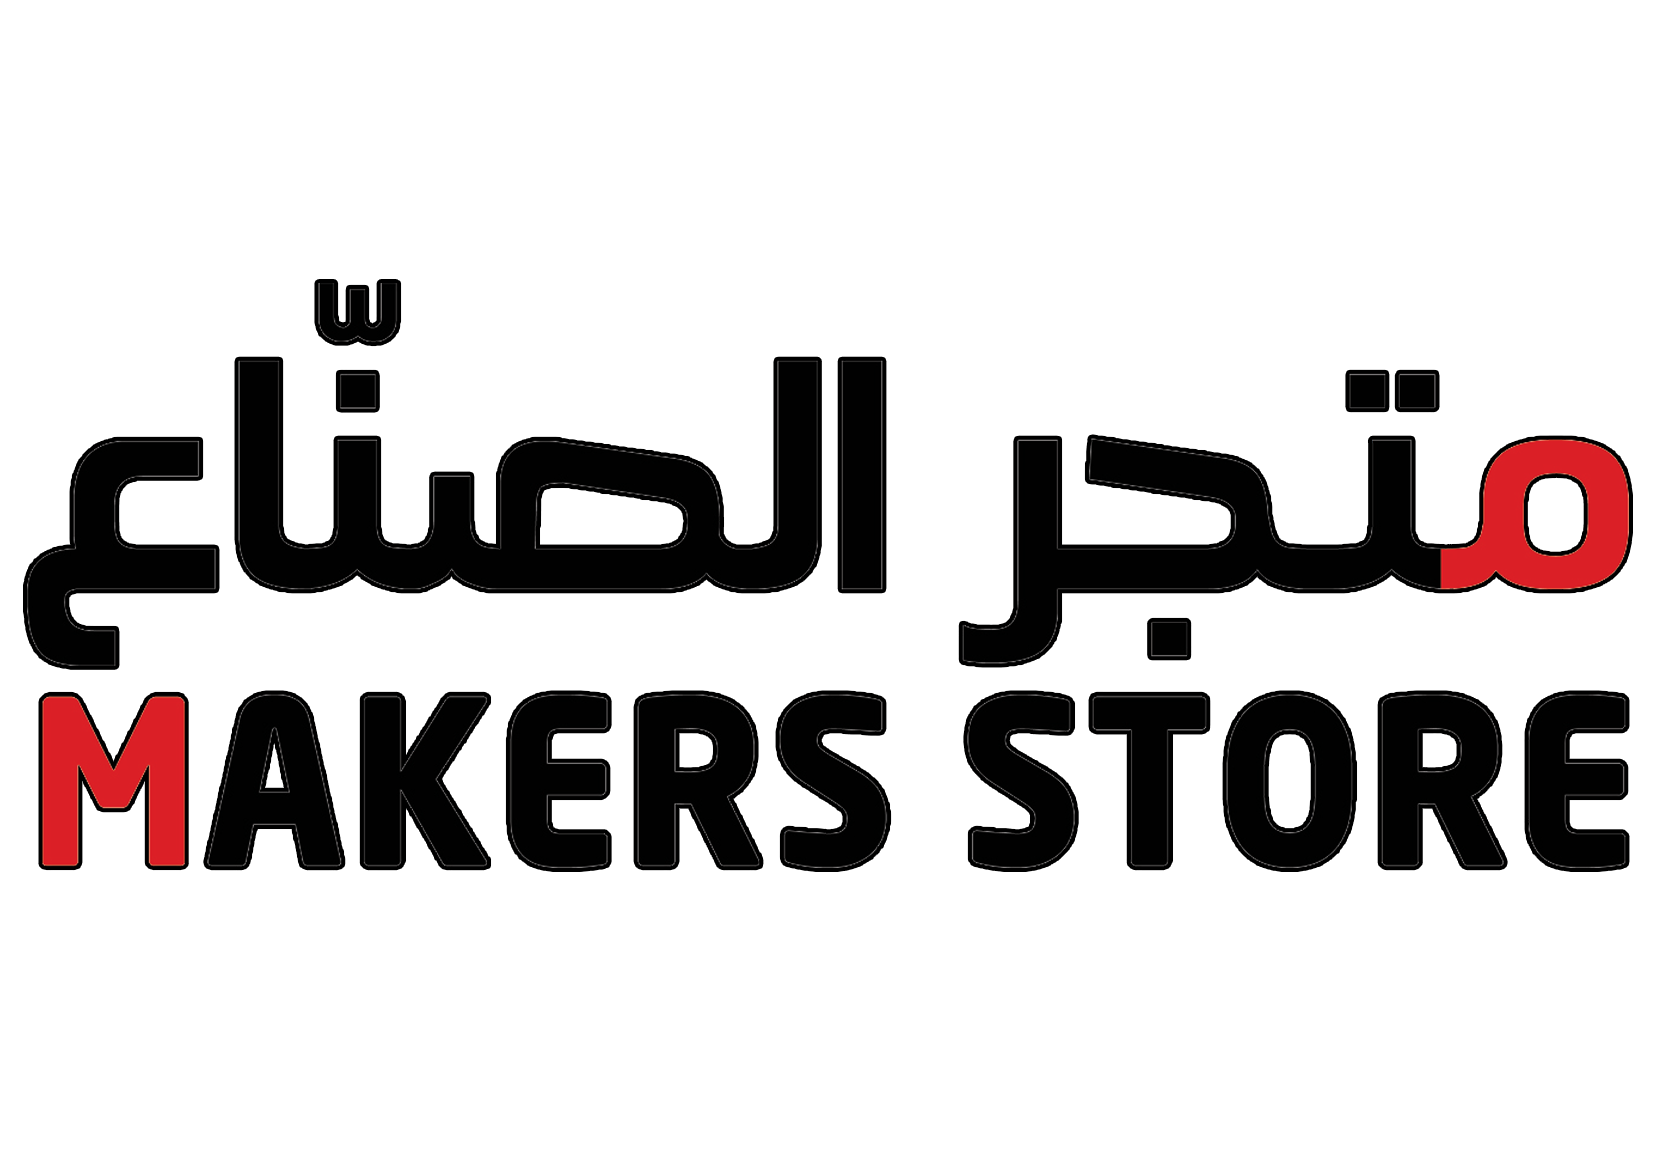 Makers Store | متجر الصناع